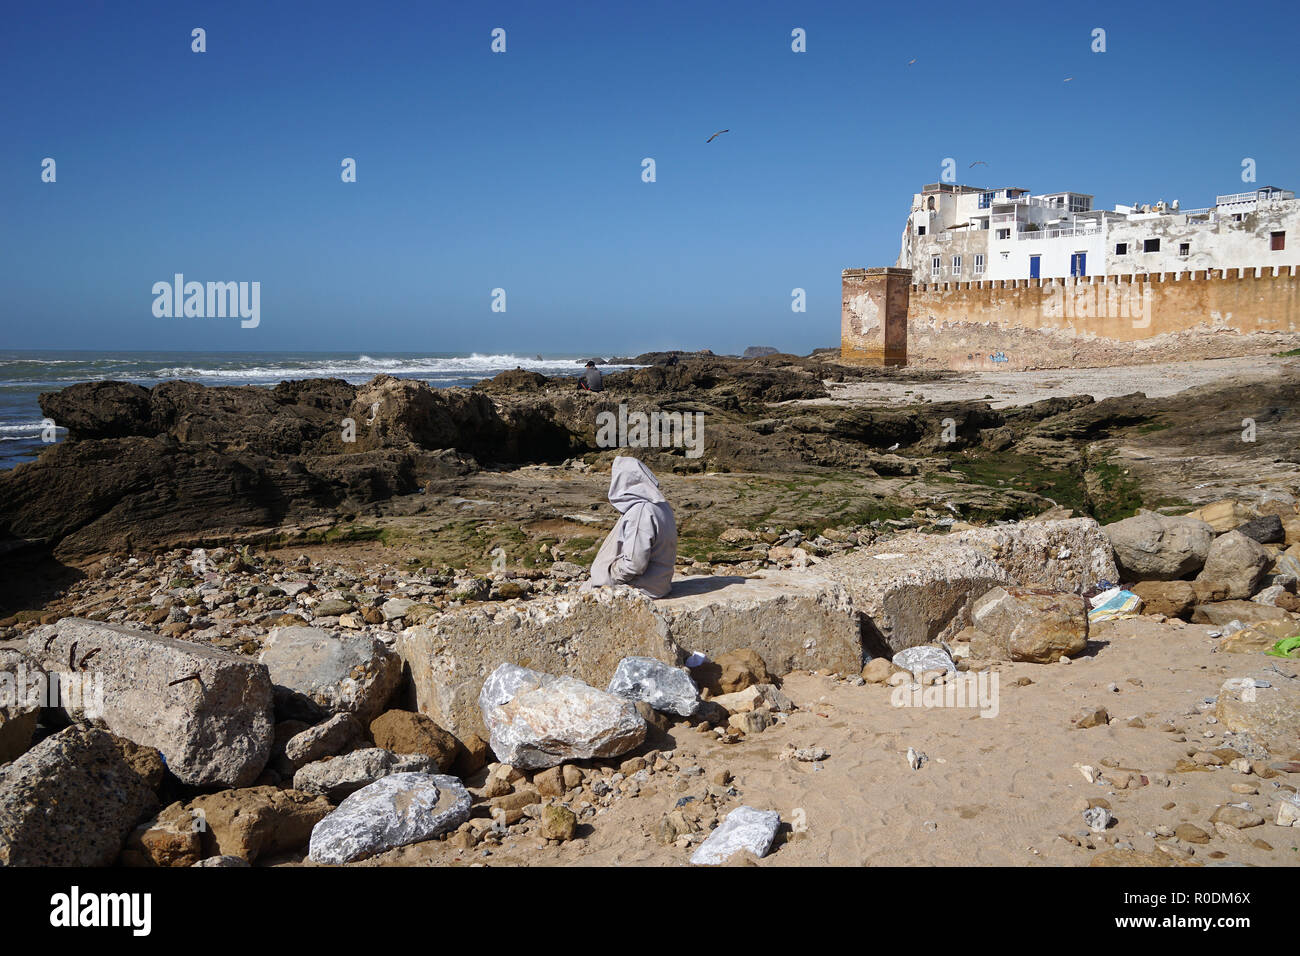 Local on the beach of Skala de la Ville in front of medina, Essaouira, Morocco Stock Photo